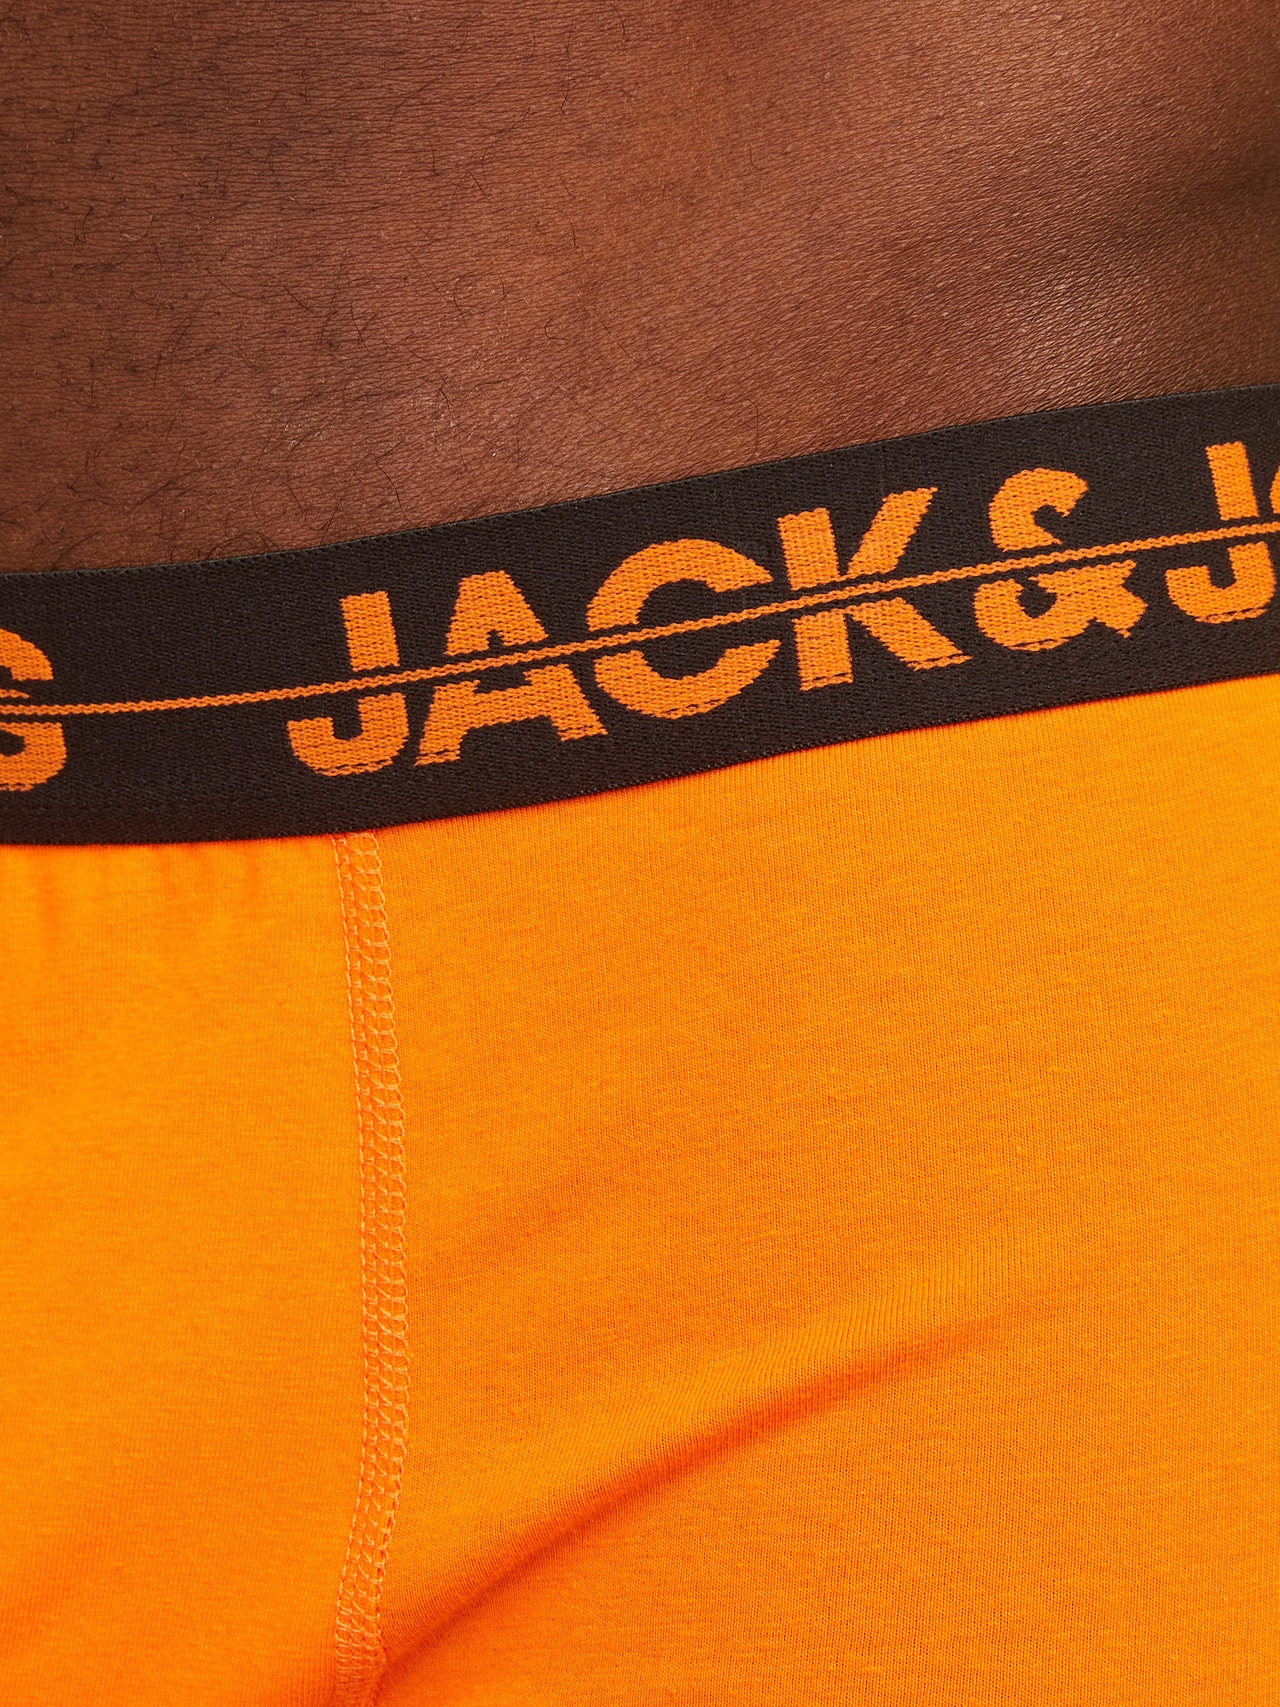 Jack & Jones 5-pack Trunks -Victoria Blue - 12251418